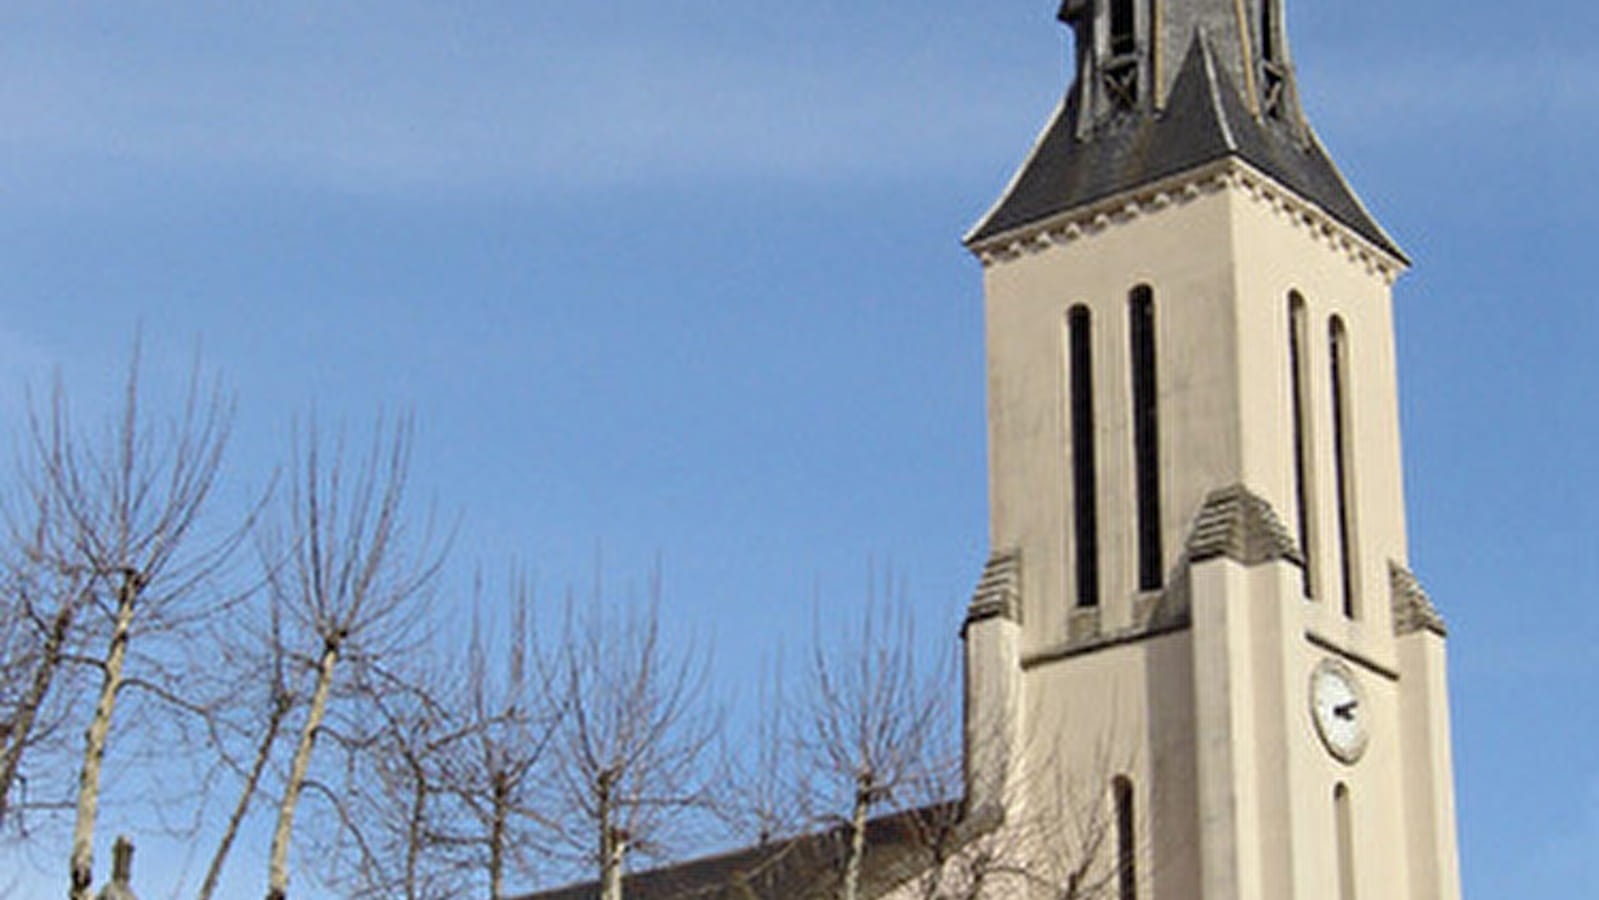 Église Saint-Charles